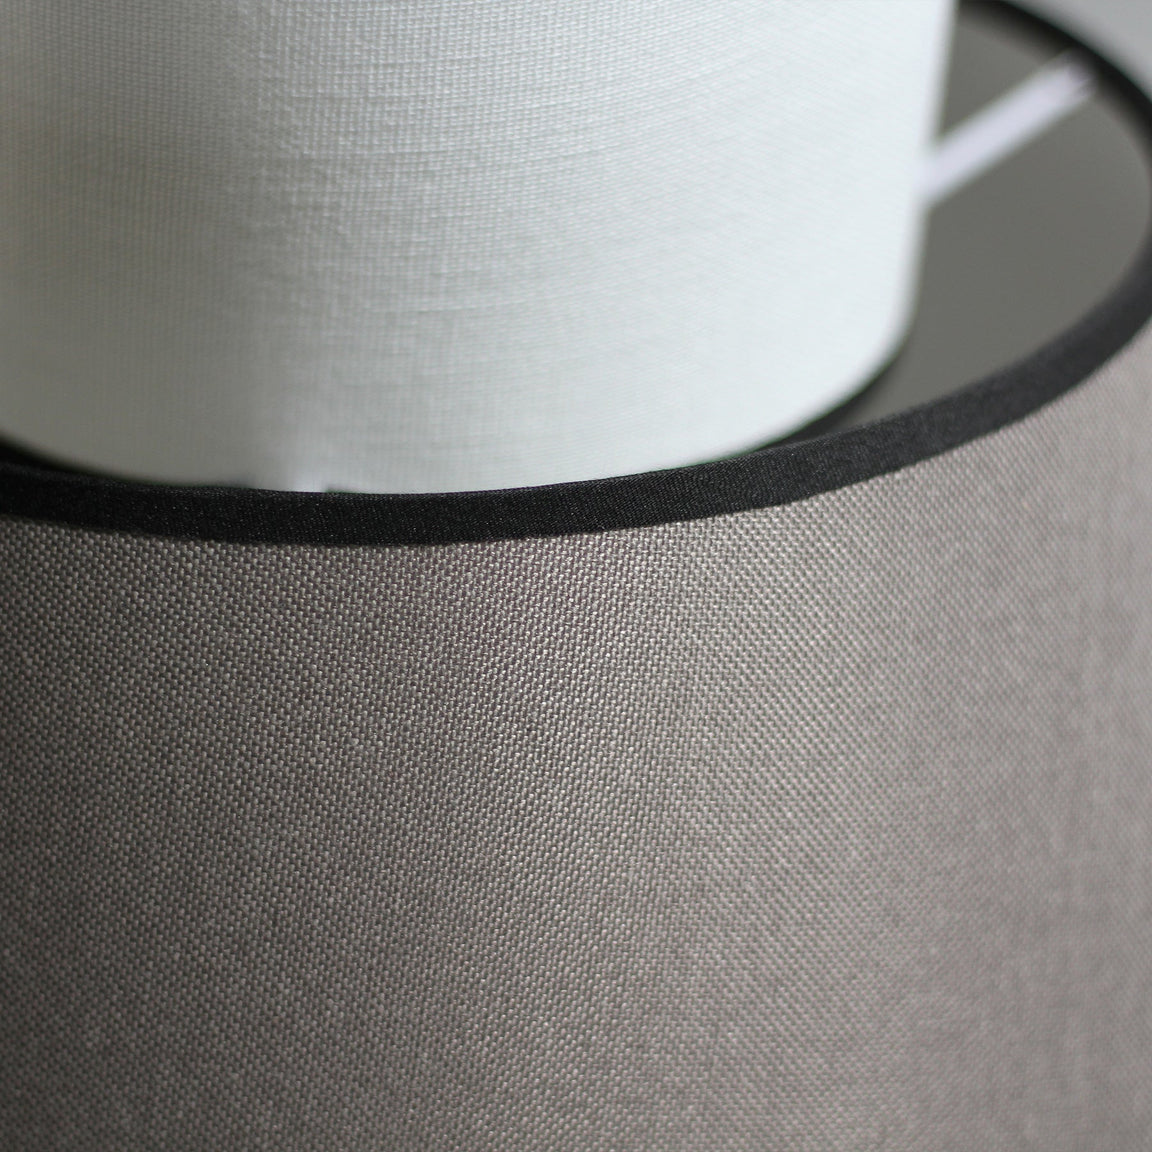 Jesse Rattan Modern Elegant Pendant Lamp Ceiling Light - Grey & Natural Fast shipping On sale